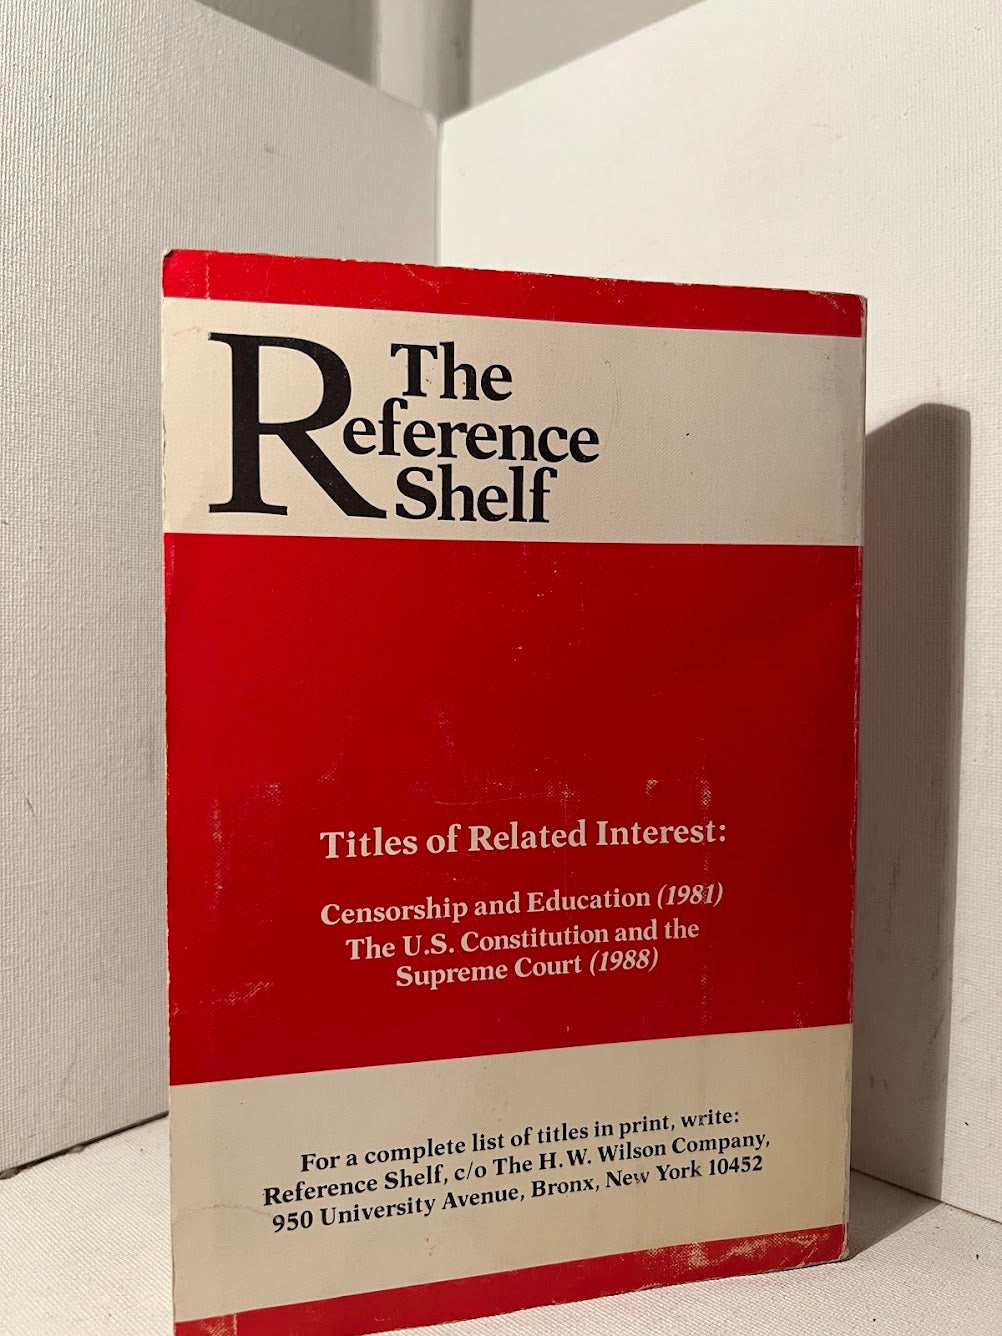 The Reference Shelf: Censorship edited by Robert Emmet Long